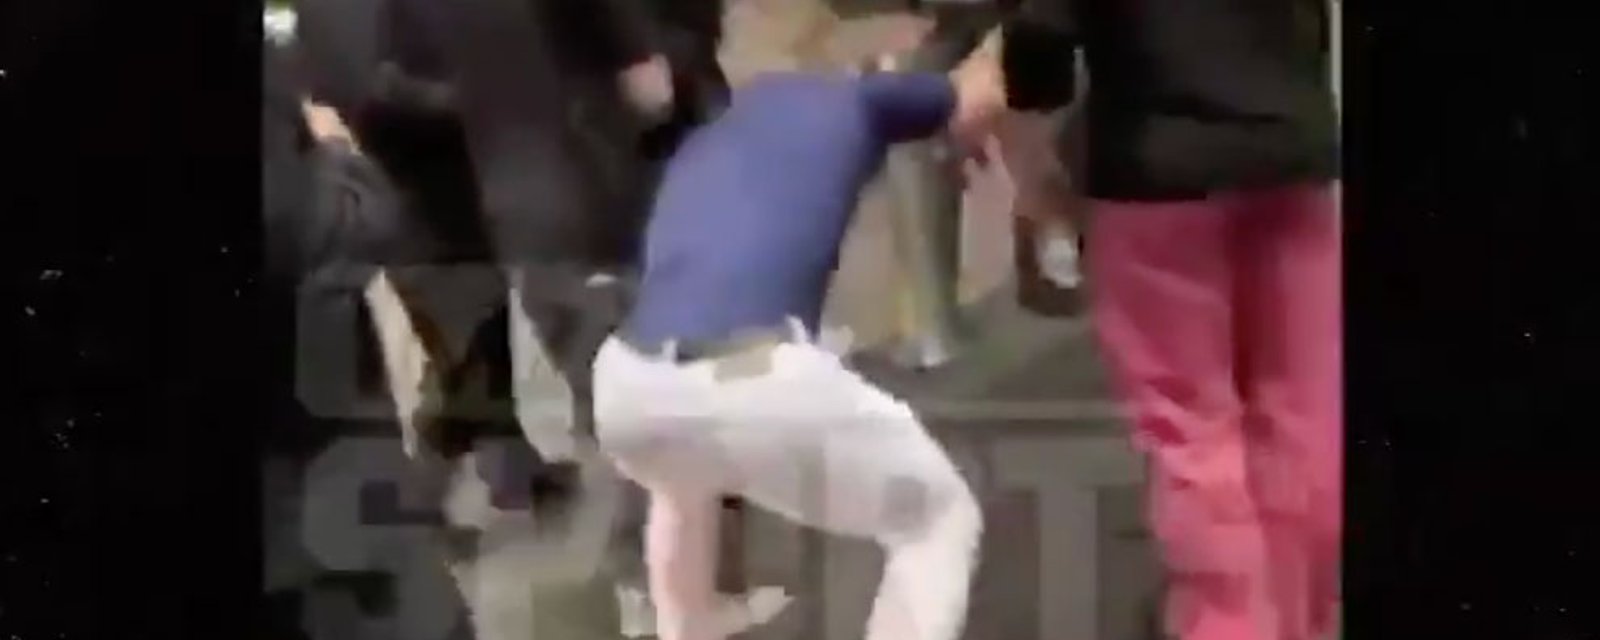 Video of Connor McGregor's violent tirade has been leaked!